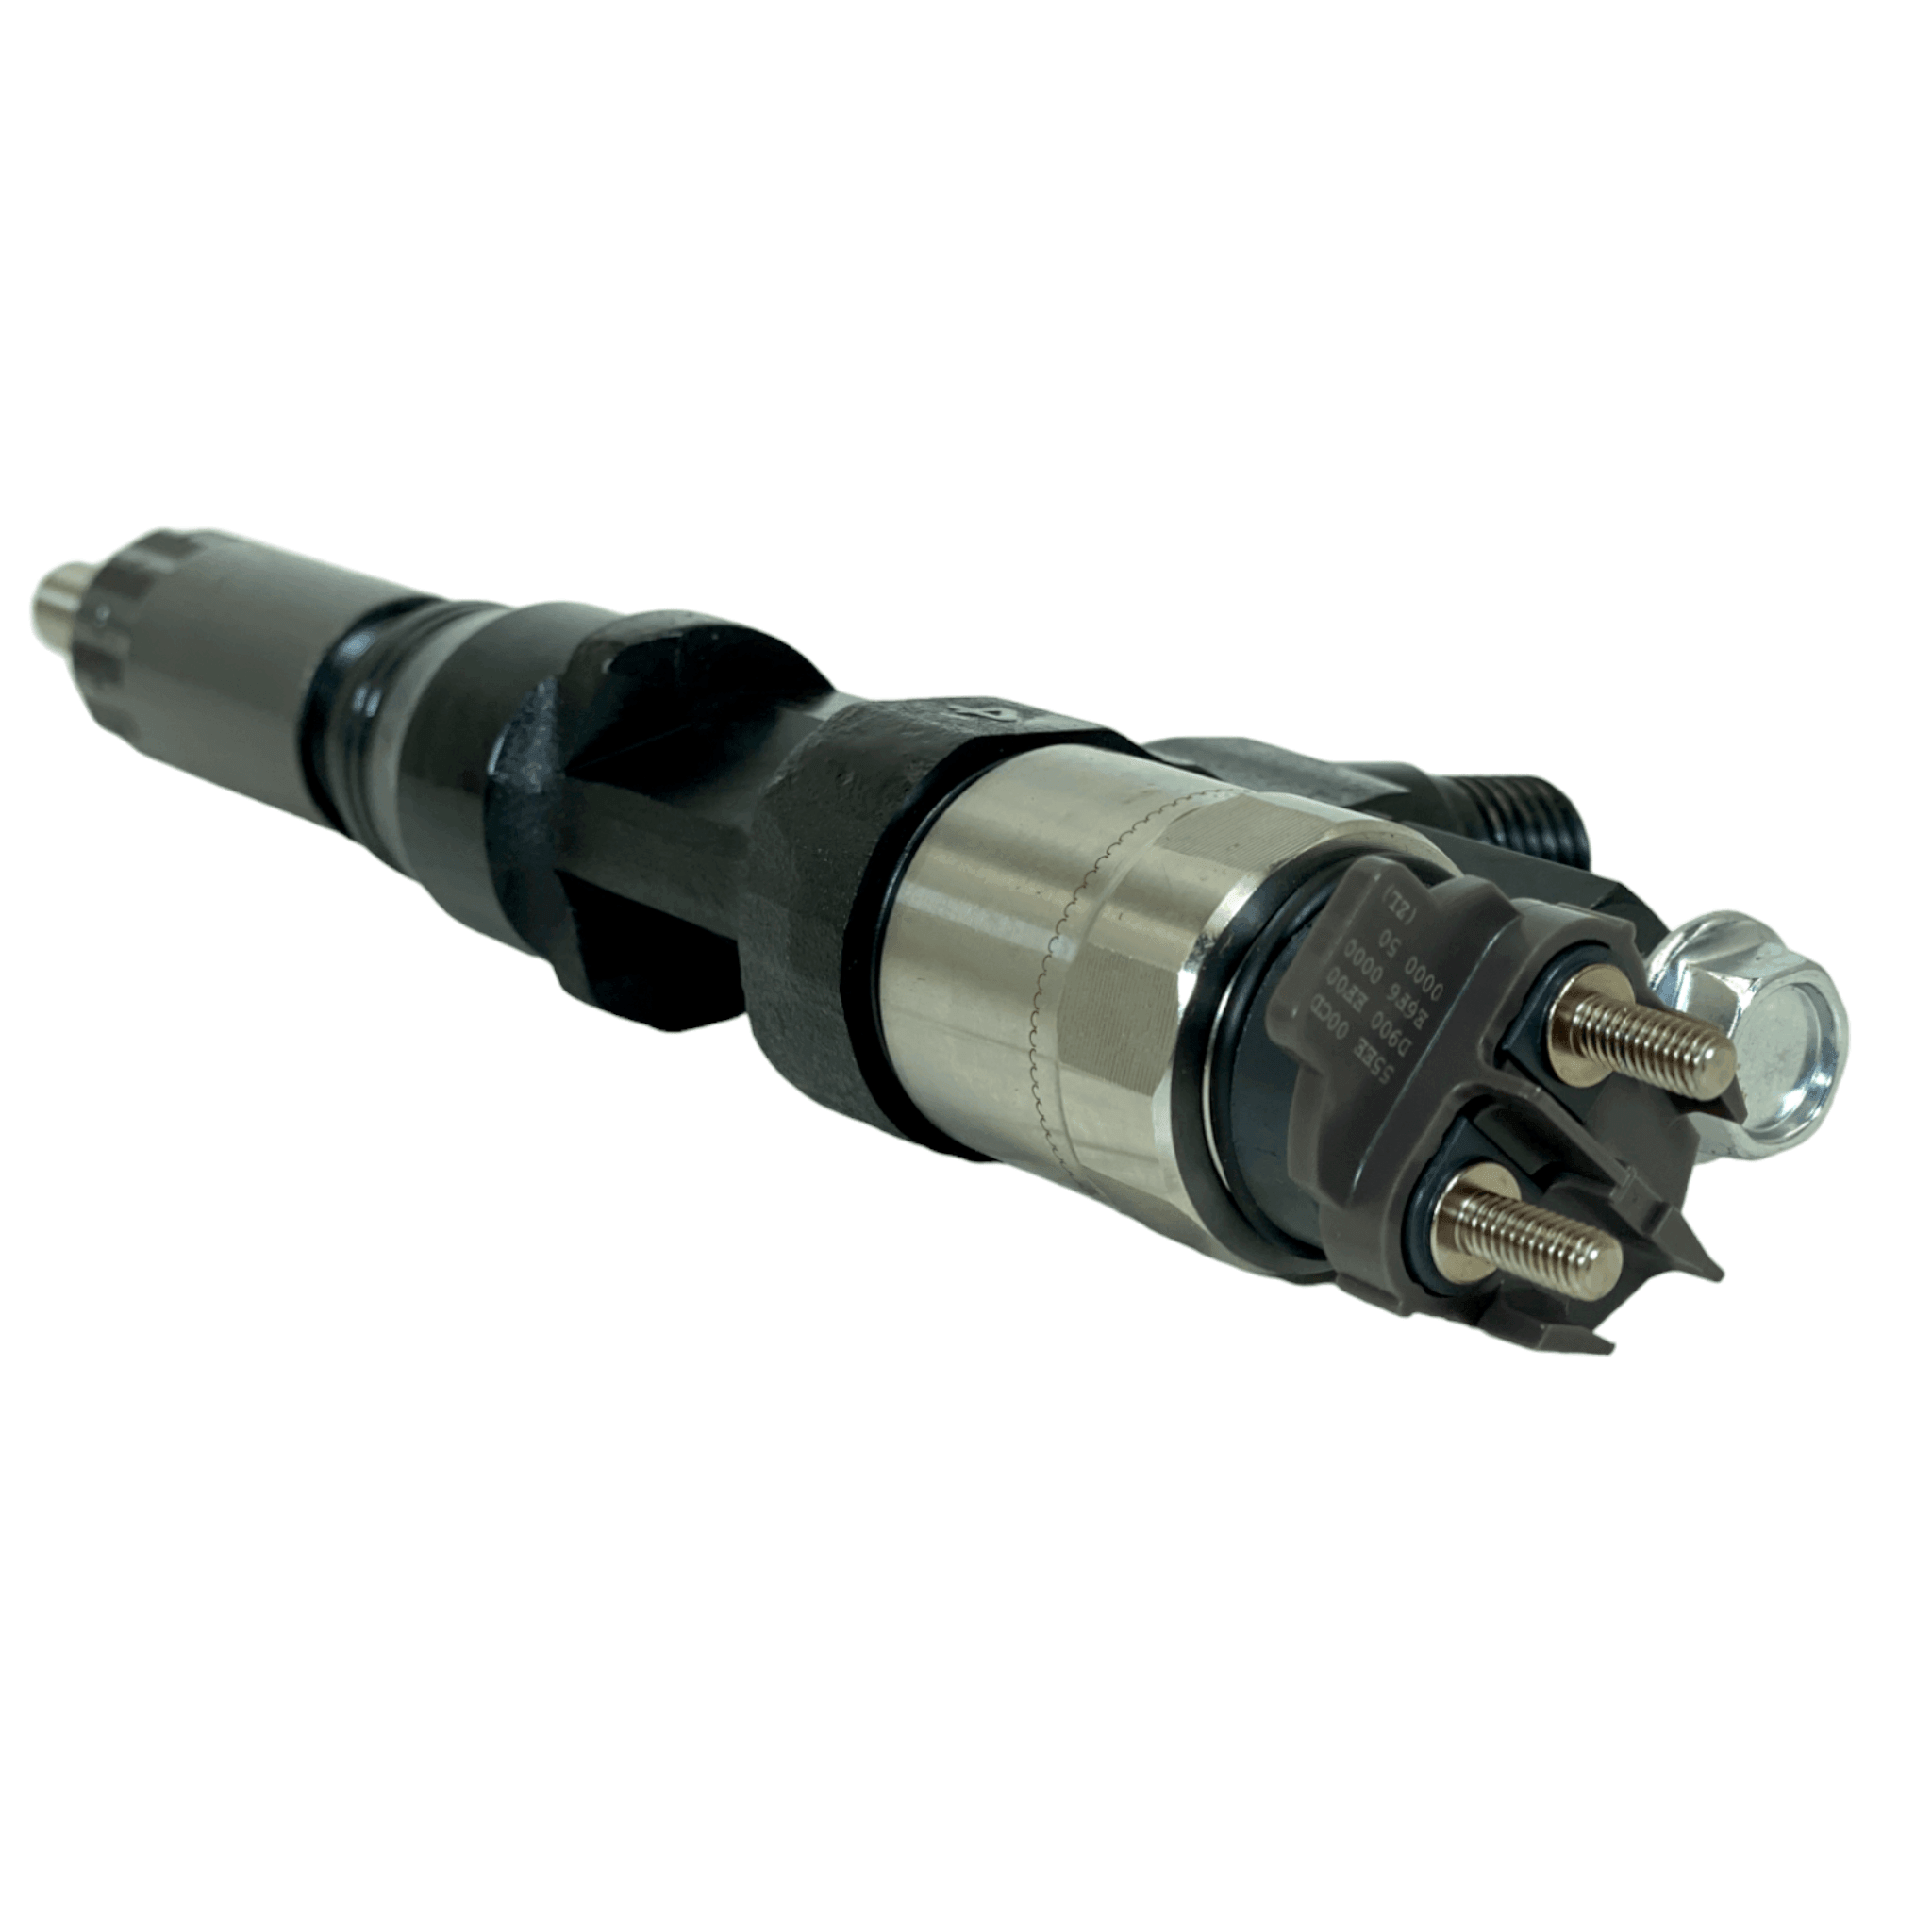 0950008091 Genuine Hino Fuel Injector - ADVANCED TRUCK PARTS